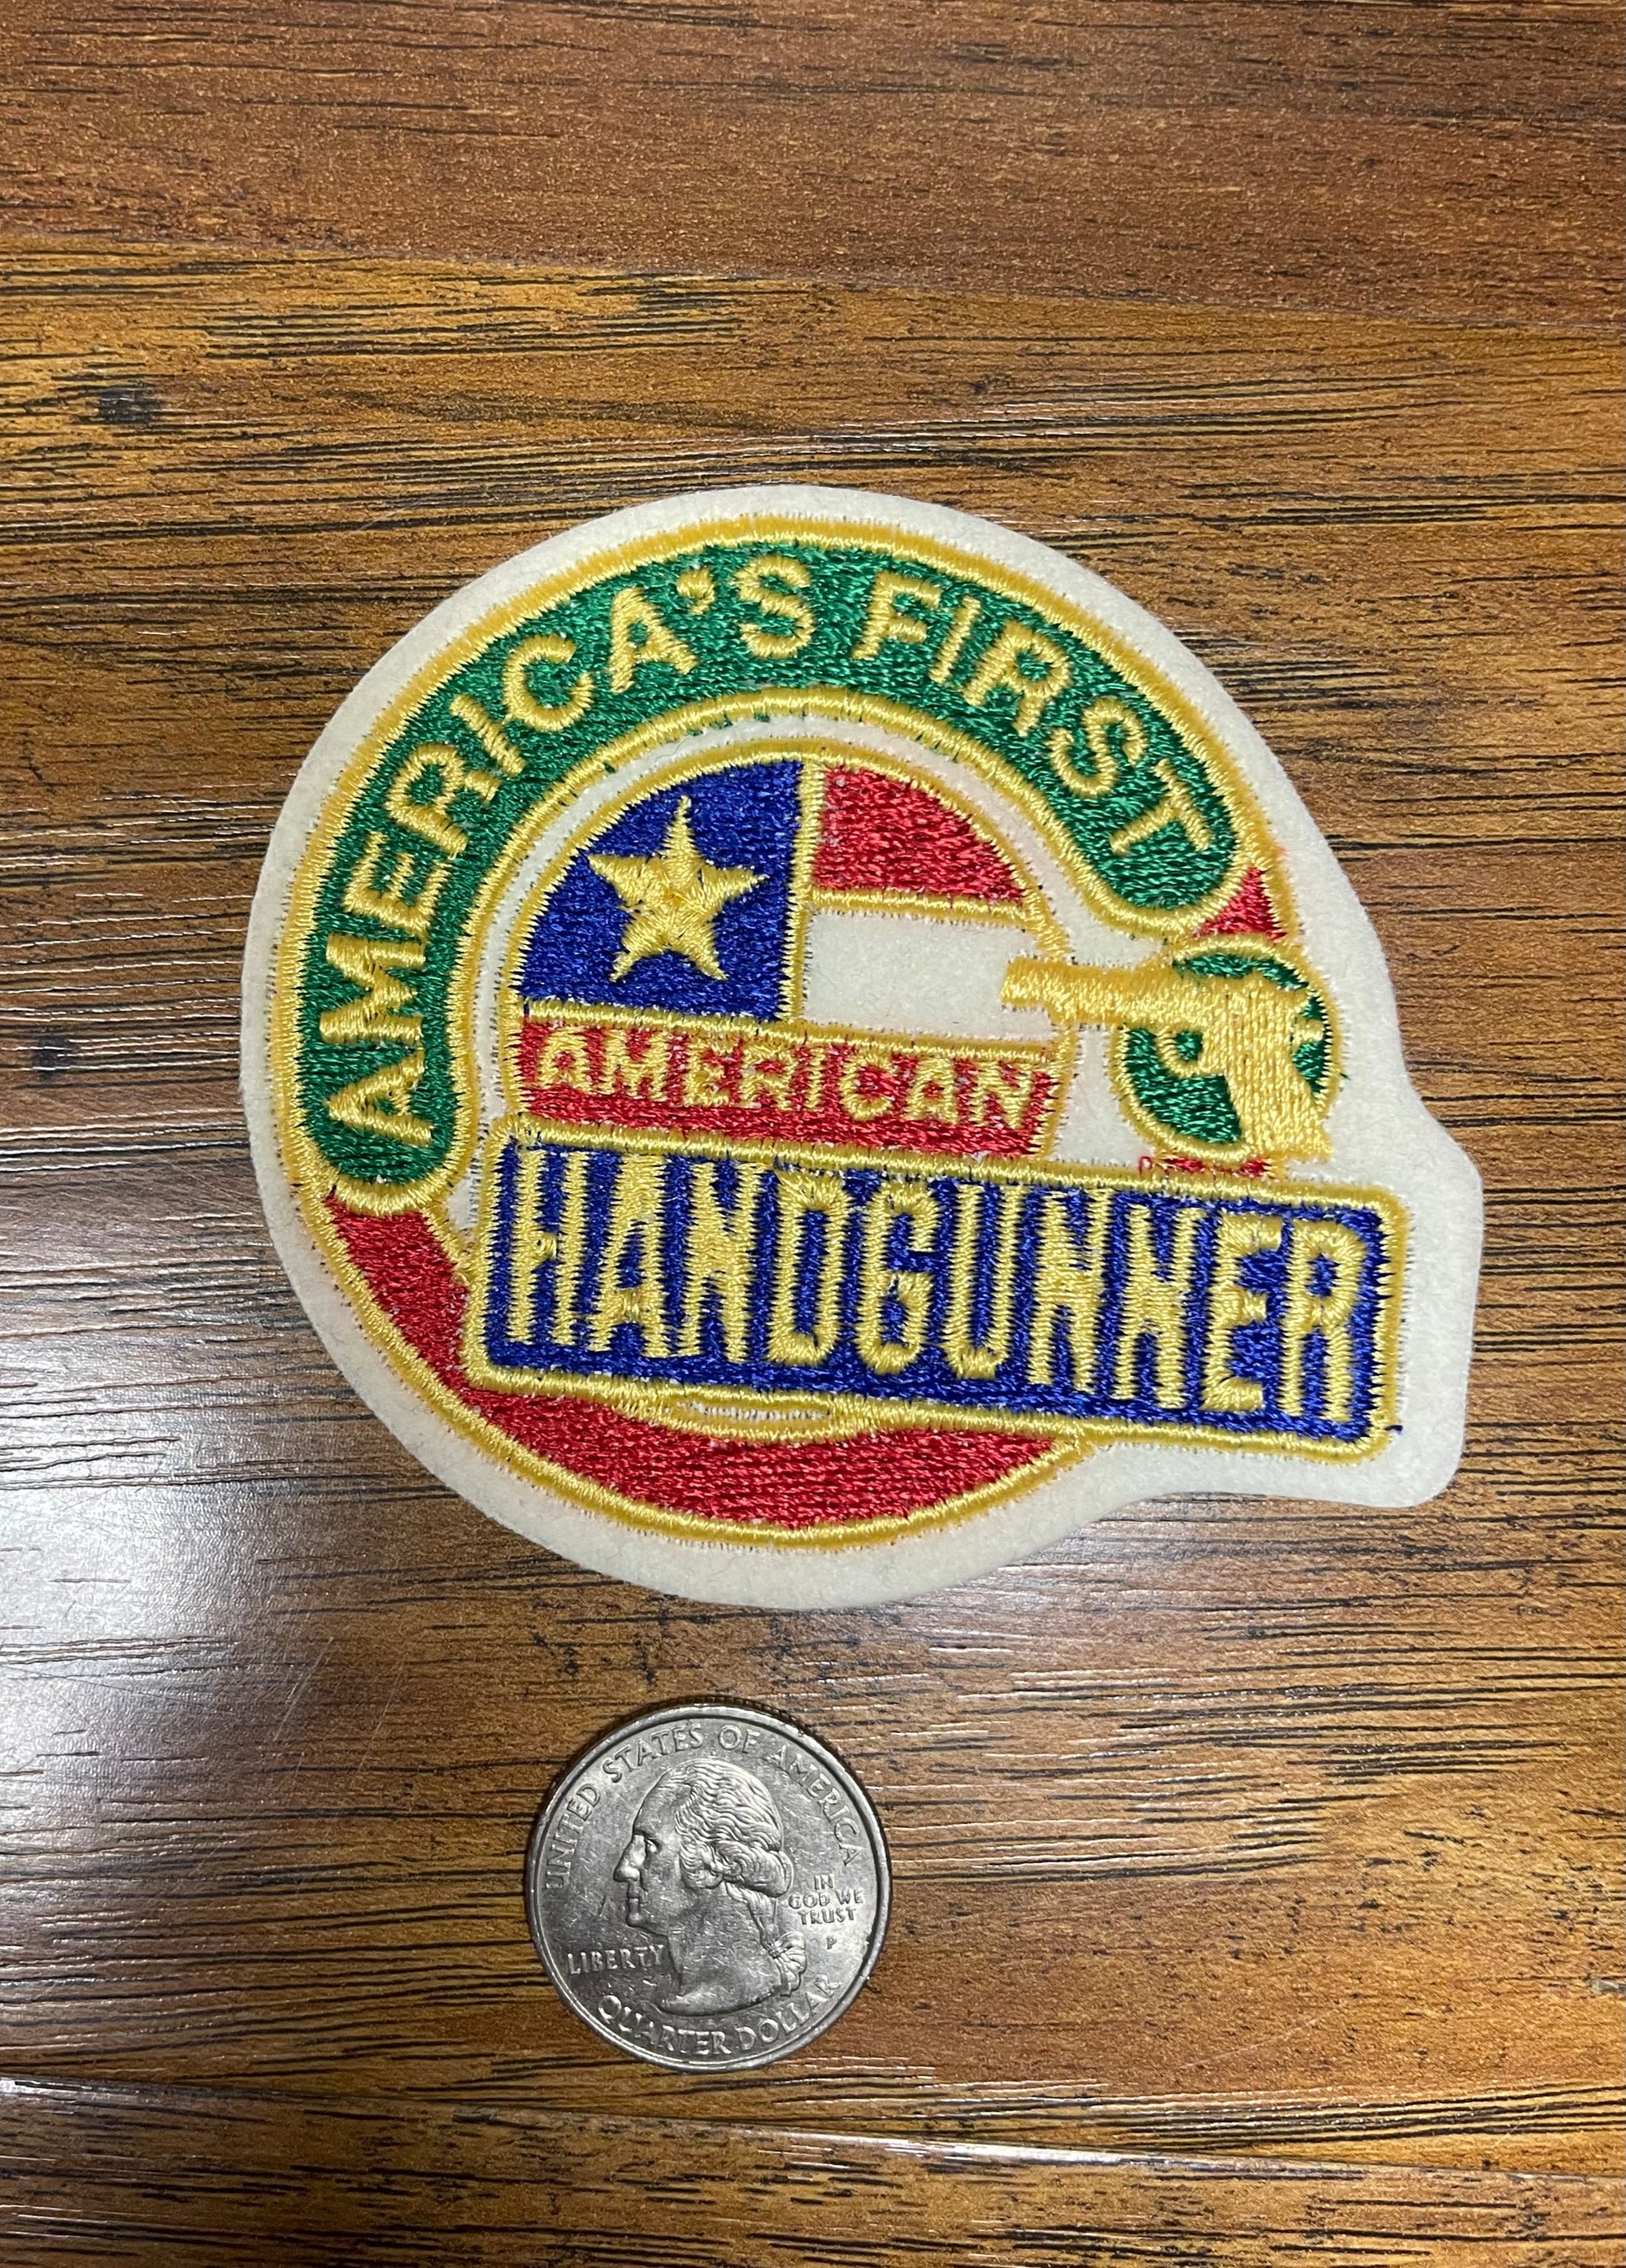 Vintage American’s First American Handgunner